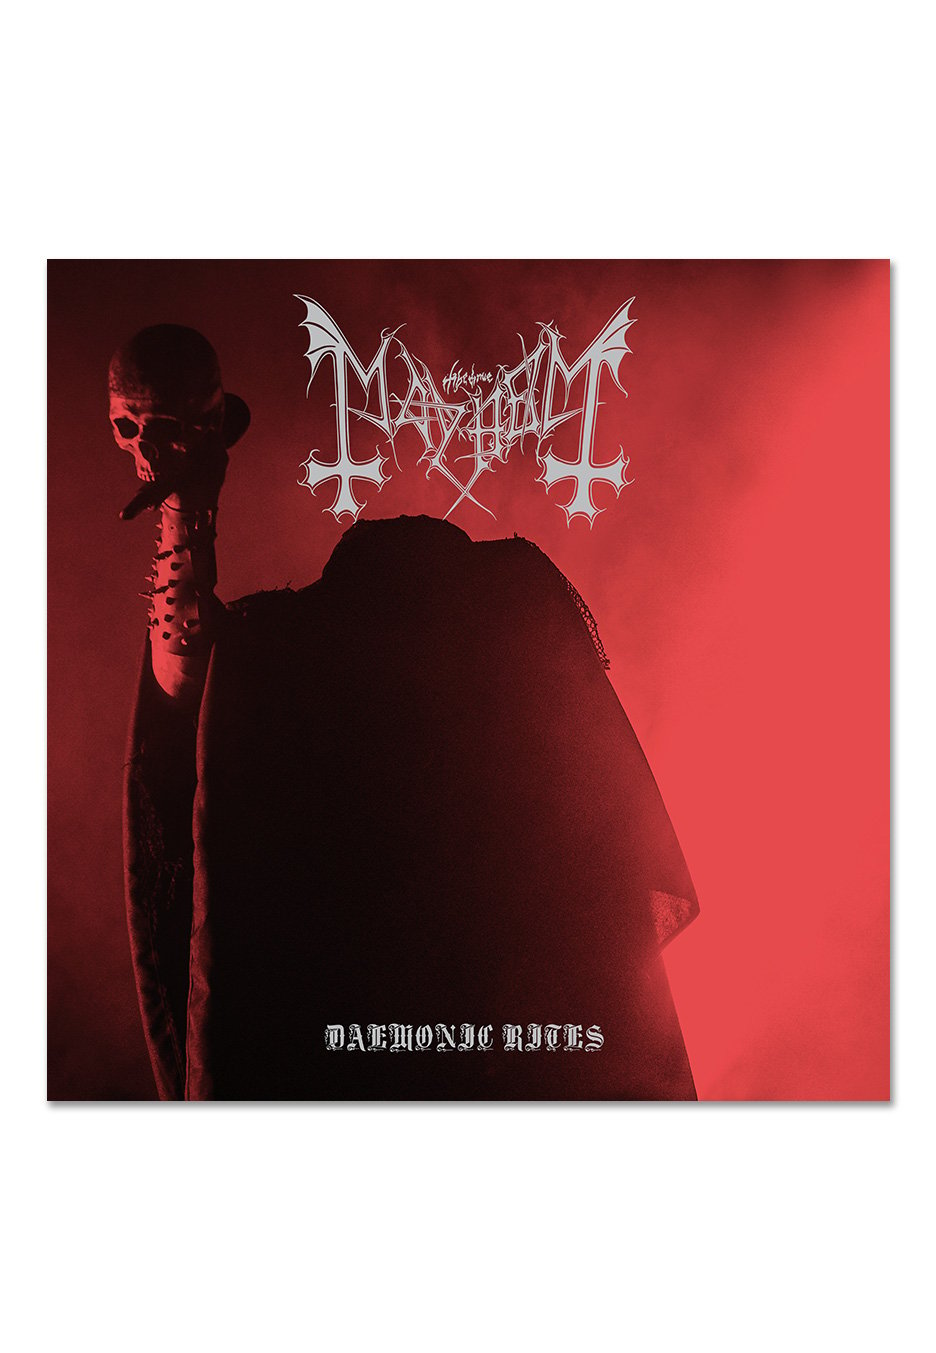 Mayhem - Daemonic Rites Ltd. Silver - Colored 2 Vinyl